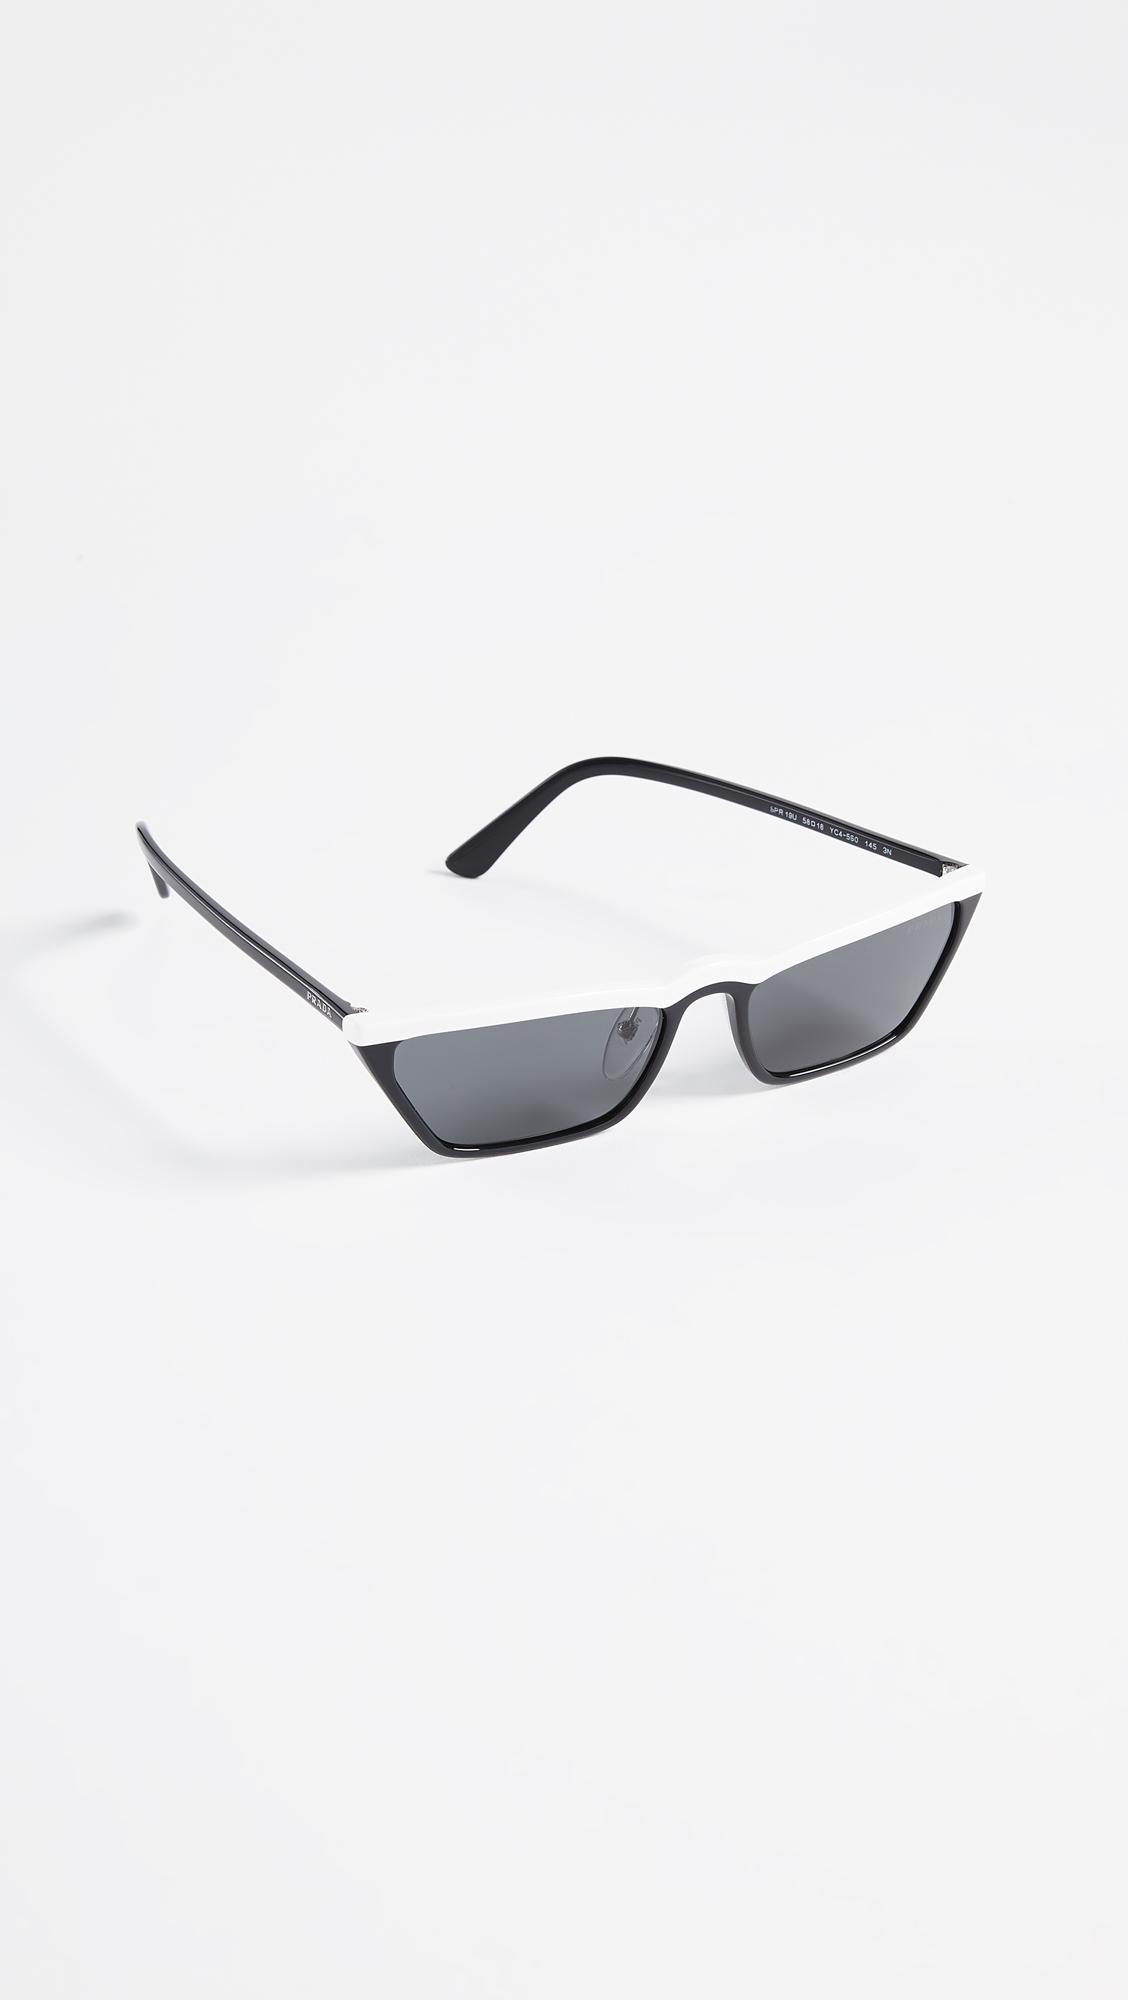 Prada Pr19us Ultravox Skinny Narrow Sunglasses in Gray | Lyst